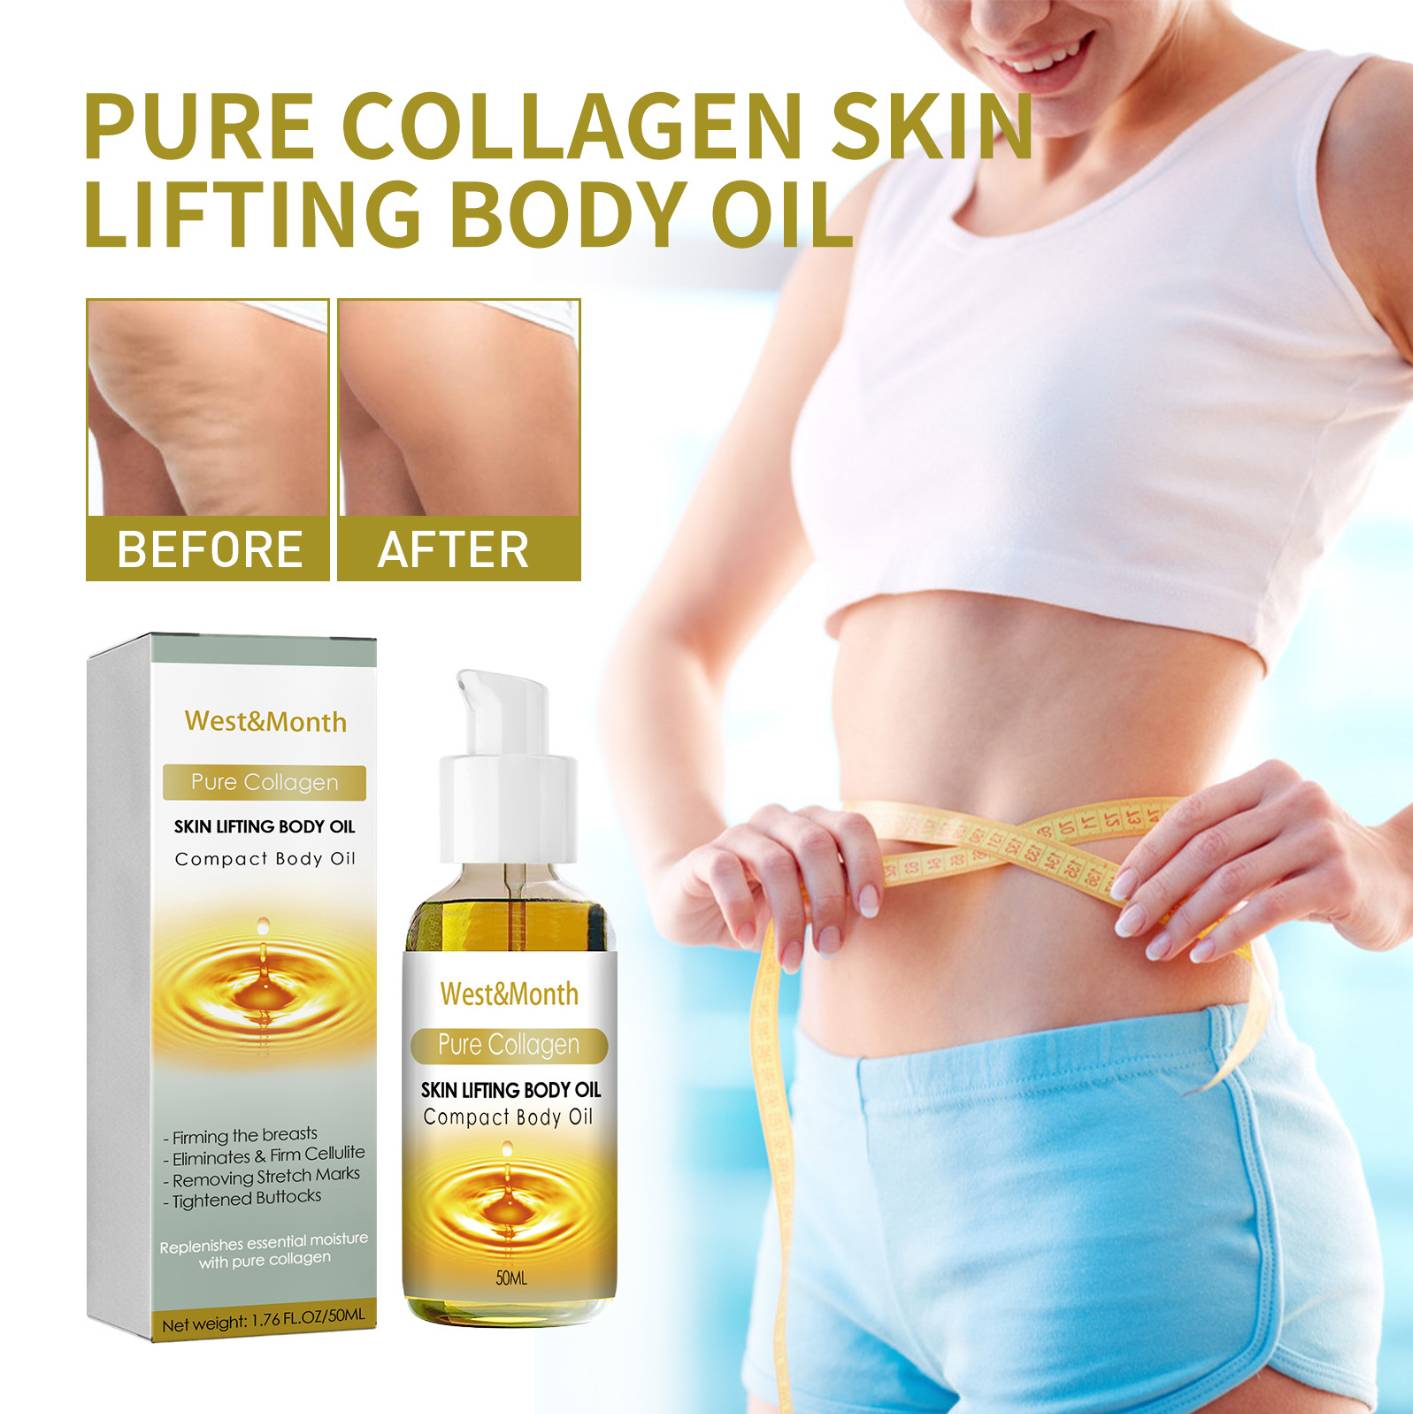 West&Month Collagen Slimming Oil Tightening Buttock Thin Leg Waist Shaping Fat Burn Anti Cellulite Body Massage Loss Weight Essential Oils